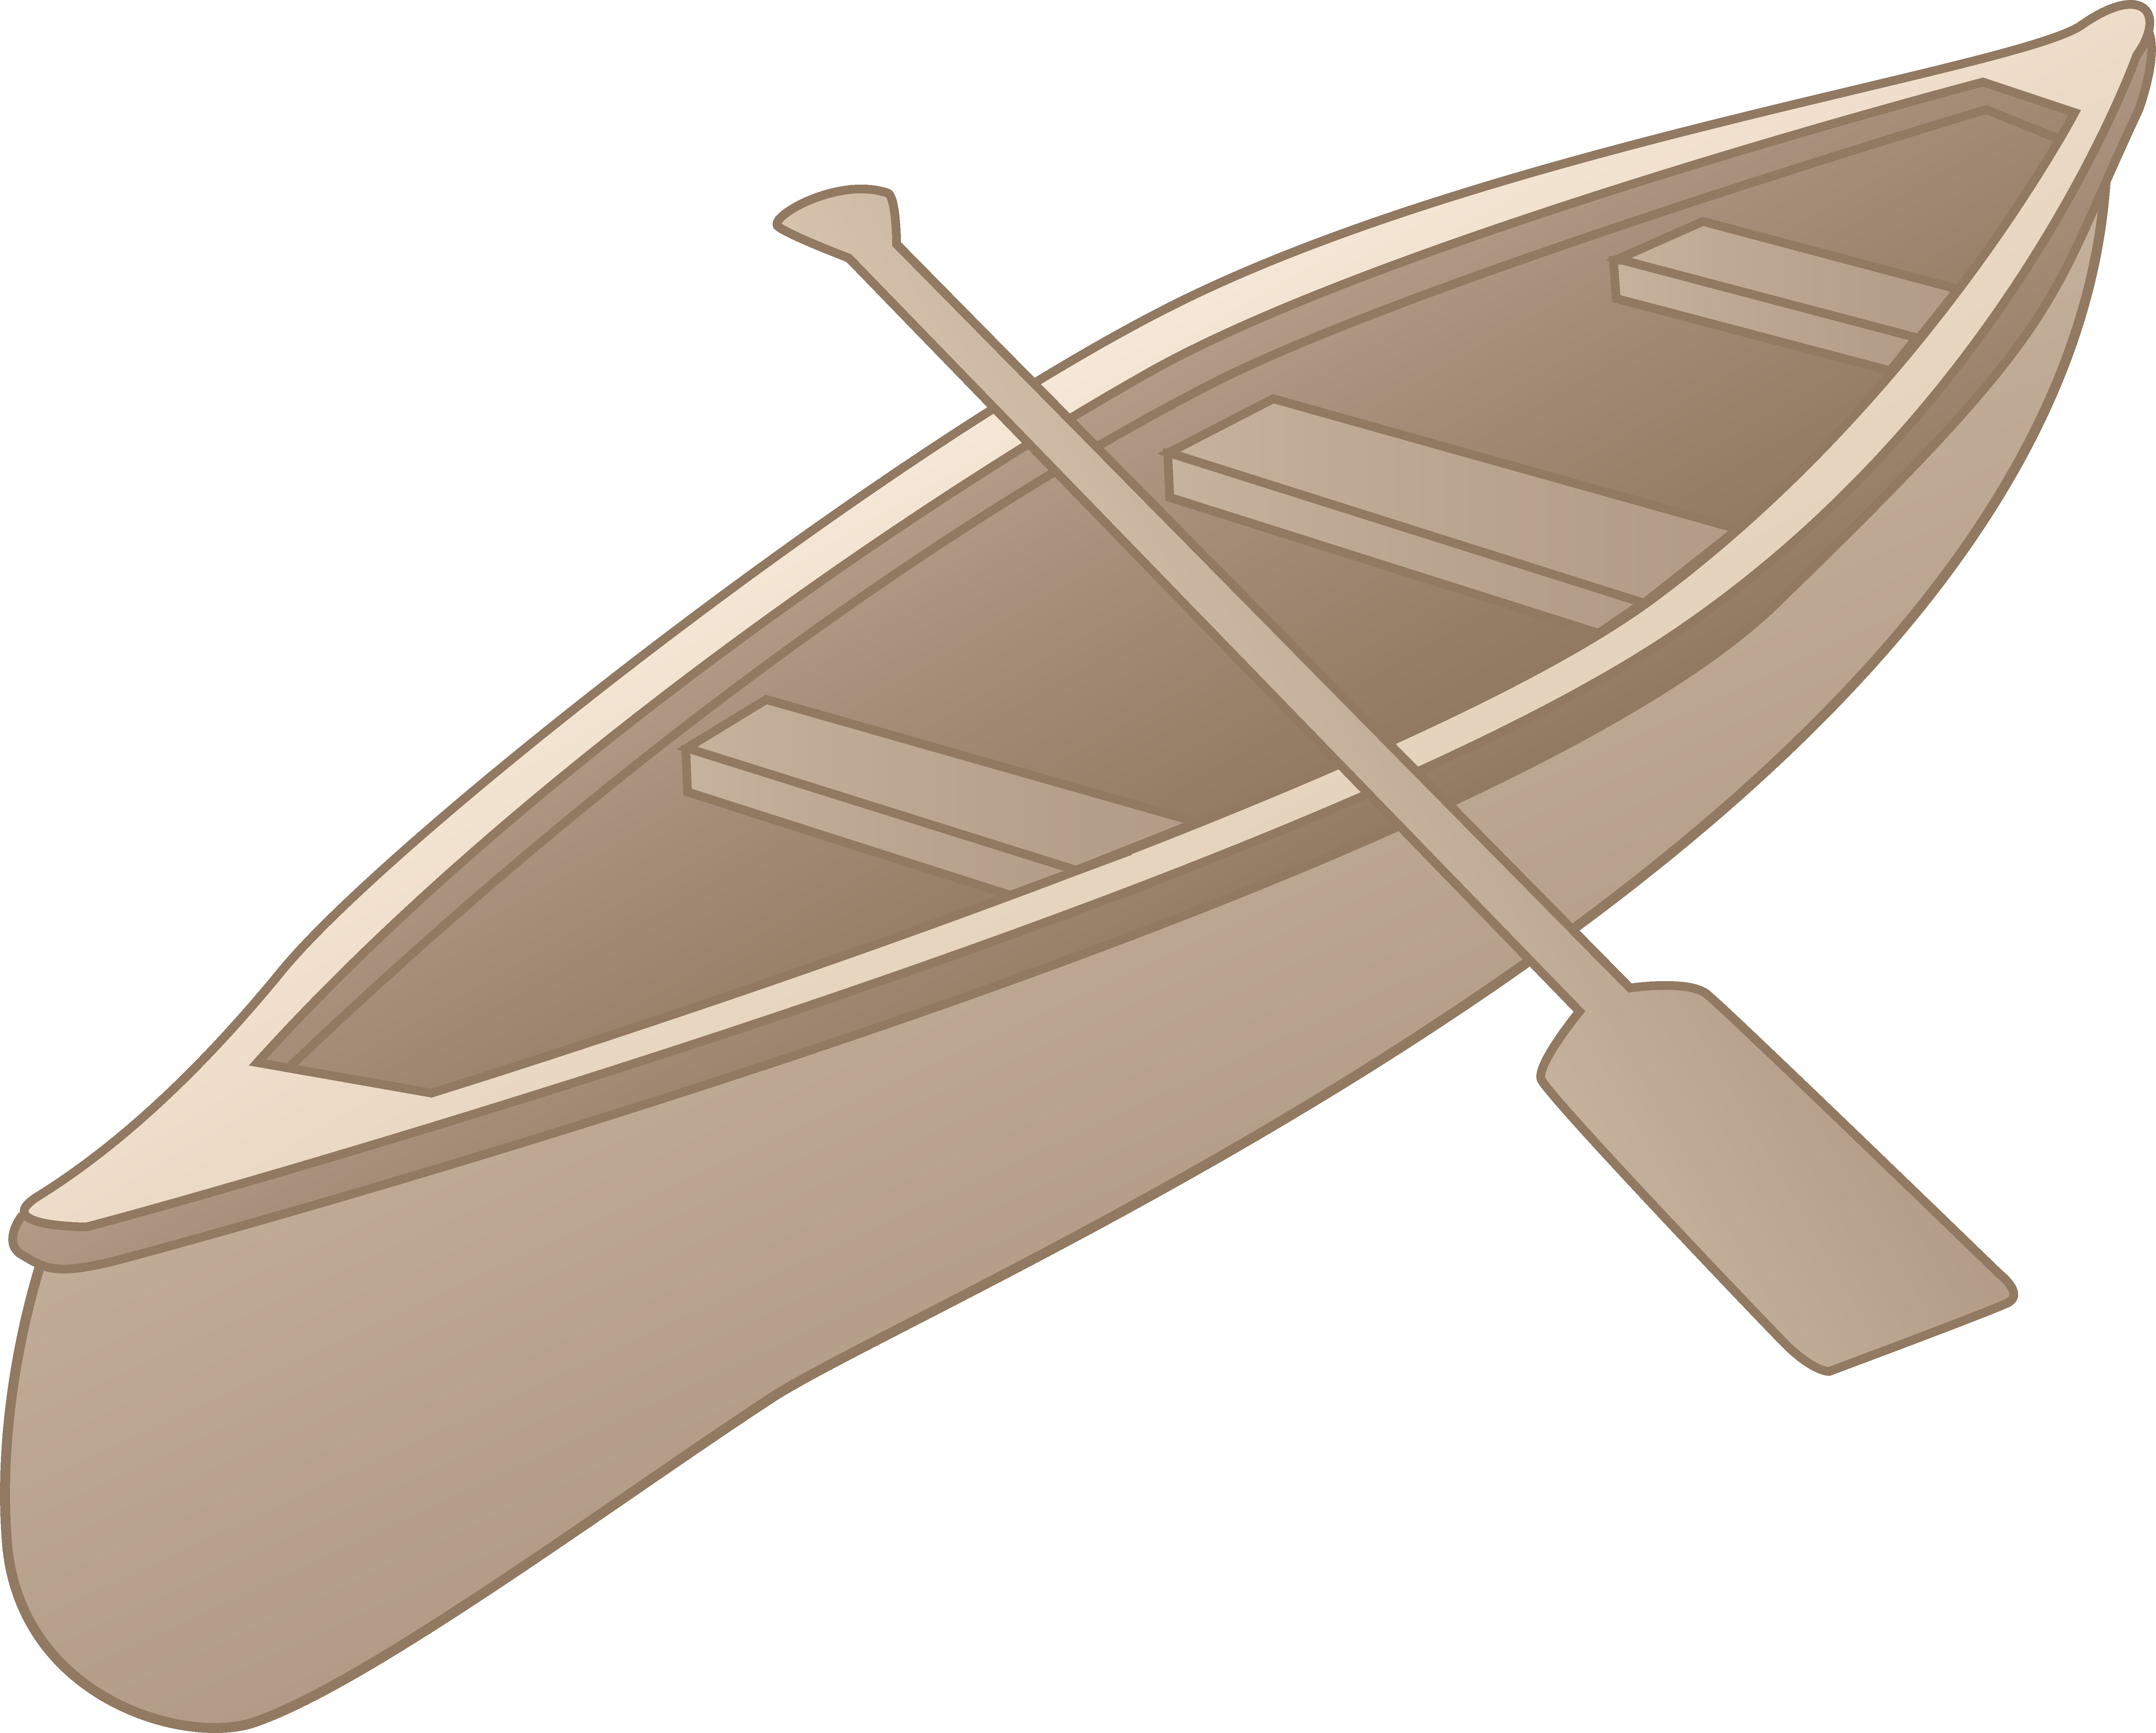 Canoe drawing at getdrawings. Kayaking clipart adventure